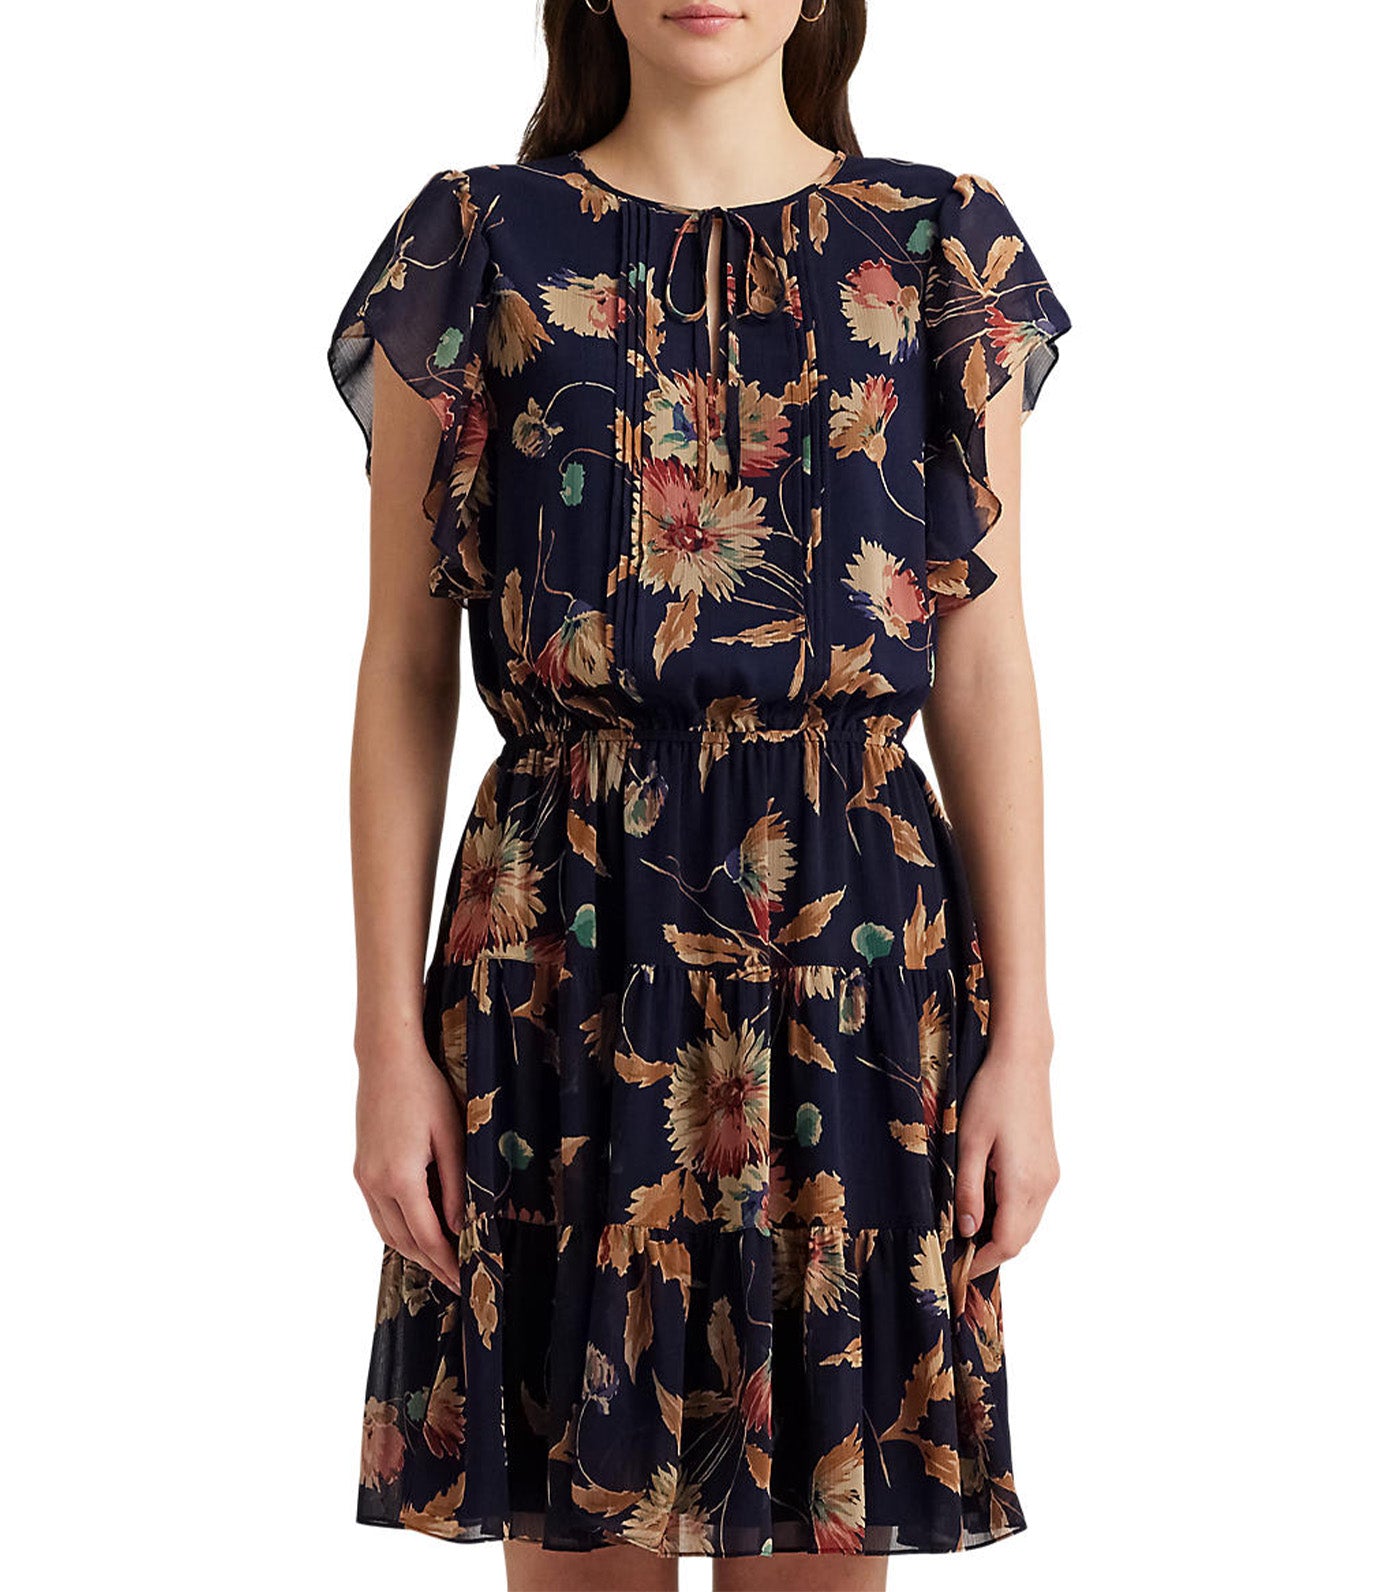 Women's Floral Crinkle Georgette Tie-Neck Dress Navy/Tan/Multi